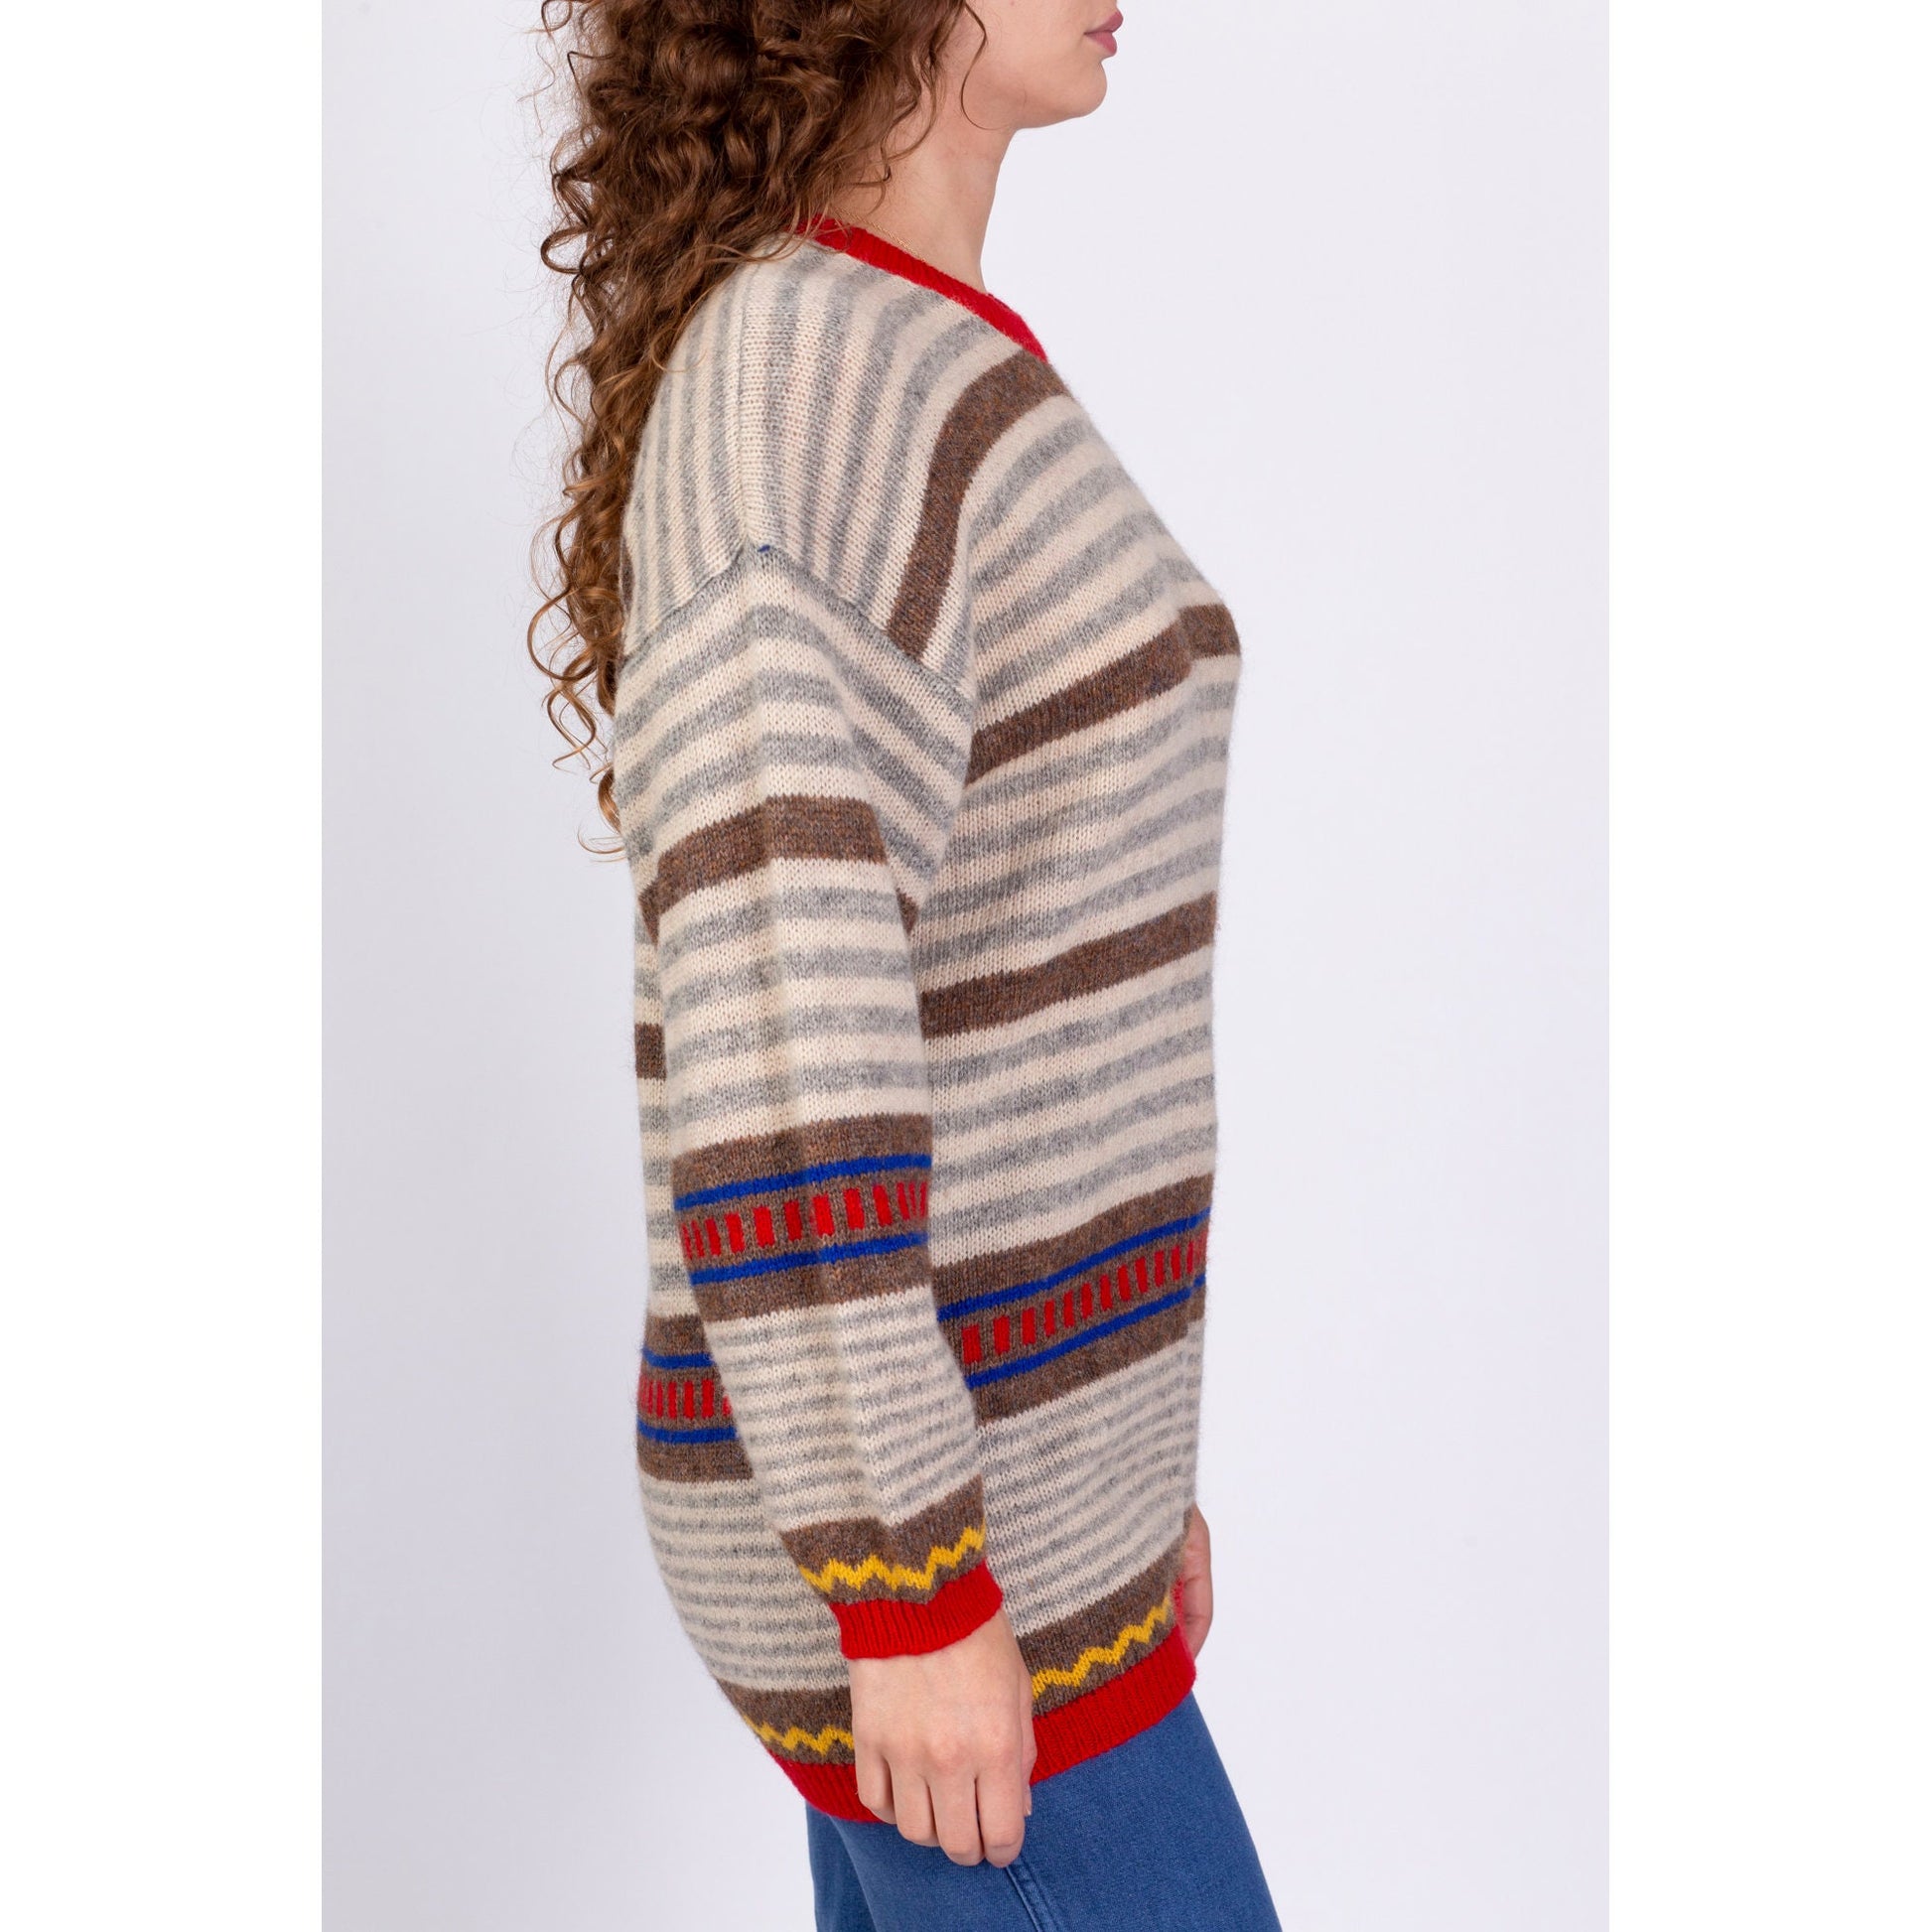 Vintage Striped Slouchy Knit Sweater - Men's Medium 